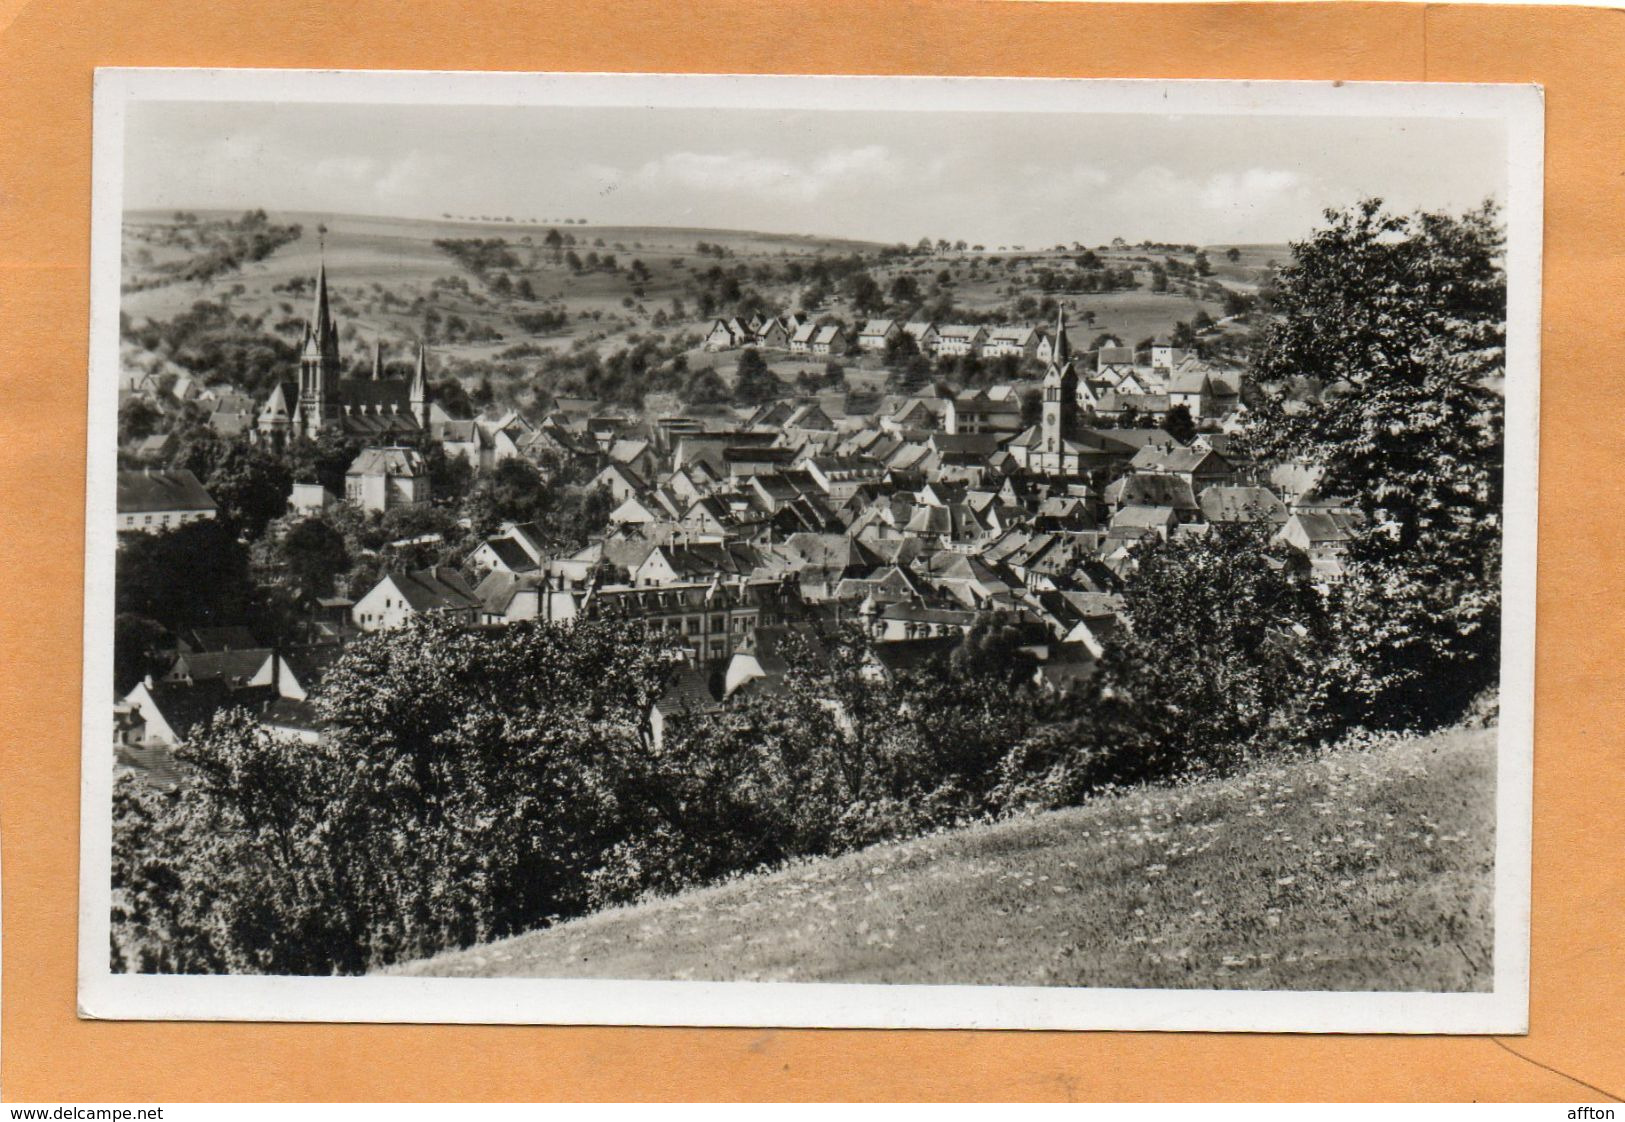 Kusel Pfalz Germany 1950 Postcard - Kusel